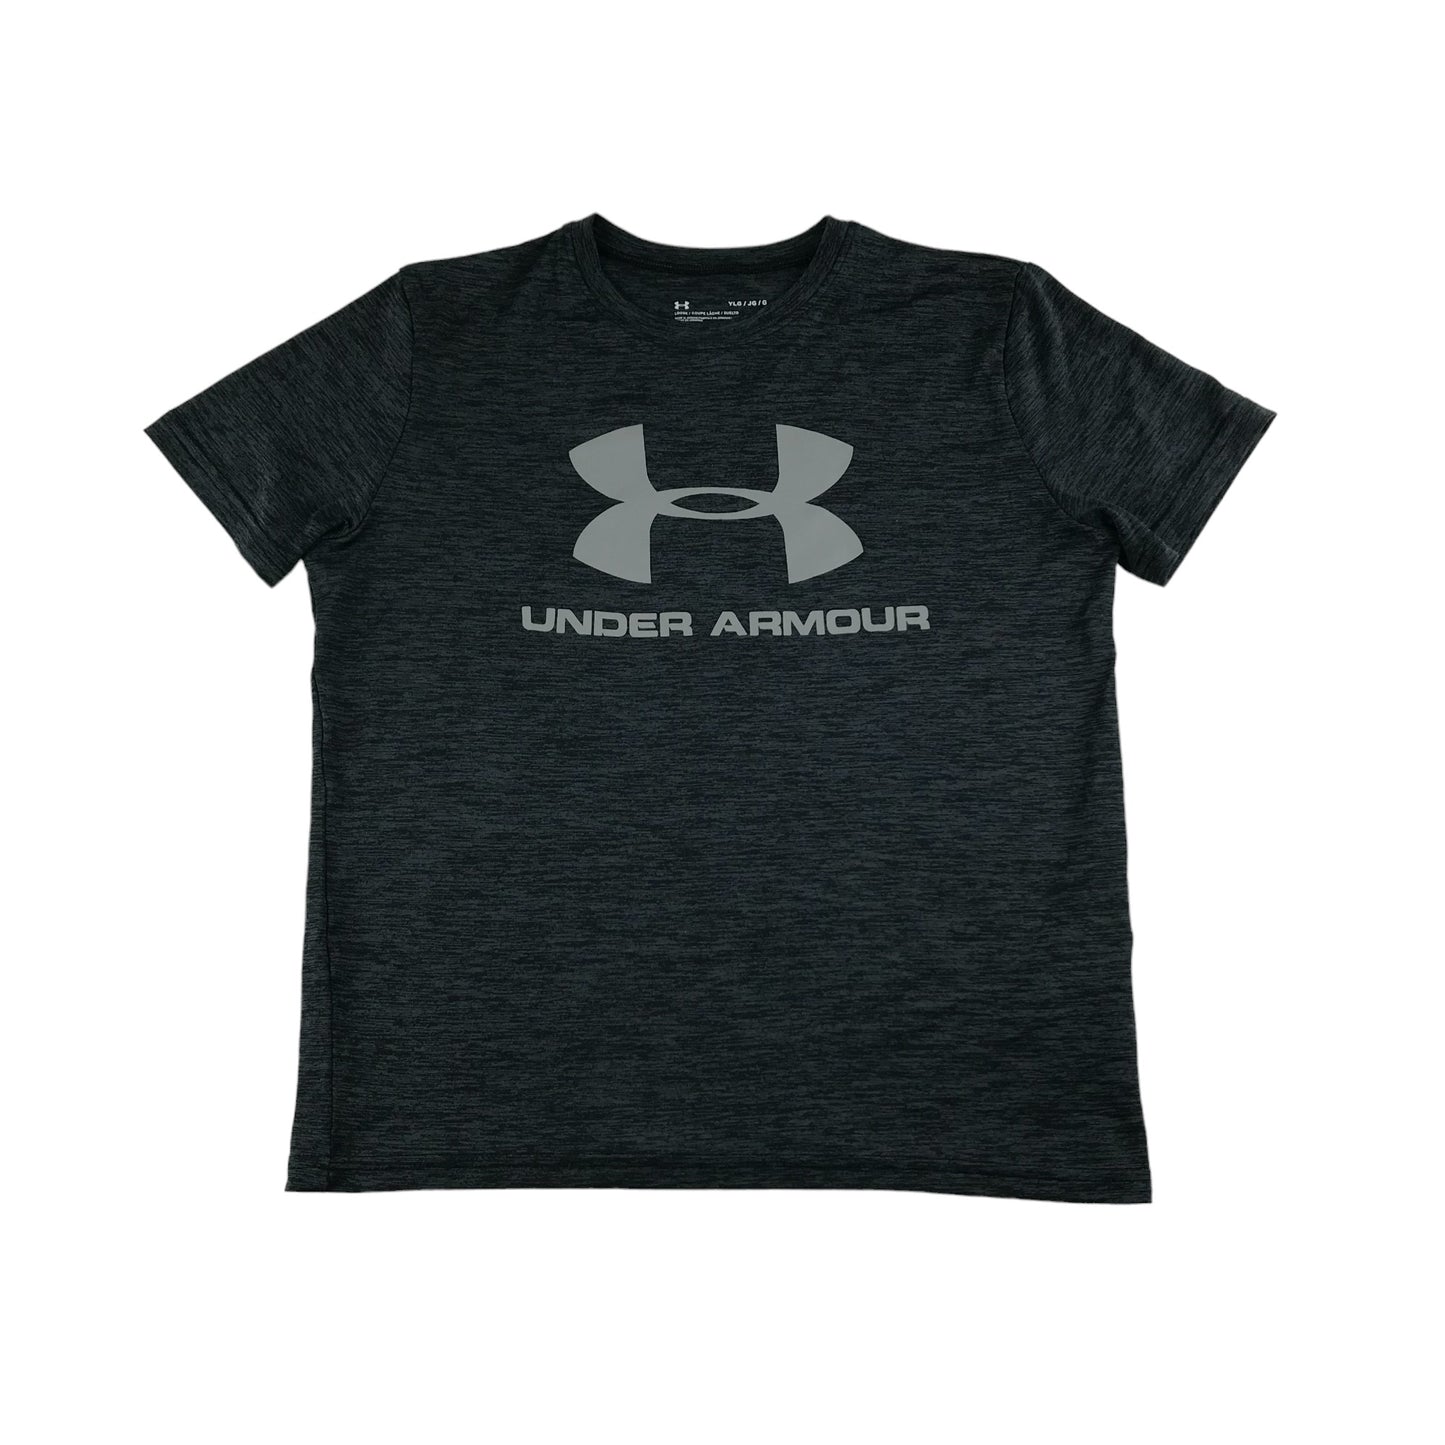 Under Armour Sports Top Age 11-12 Dark Grey Heatgear Distressed Pattern Short Sleeve T-shirt